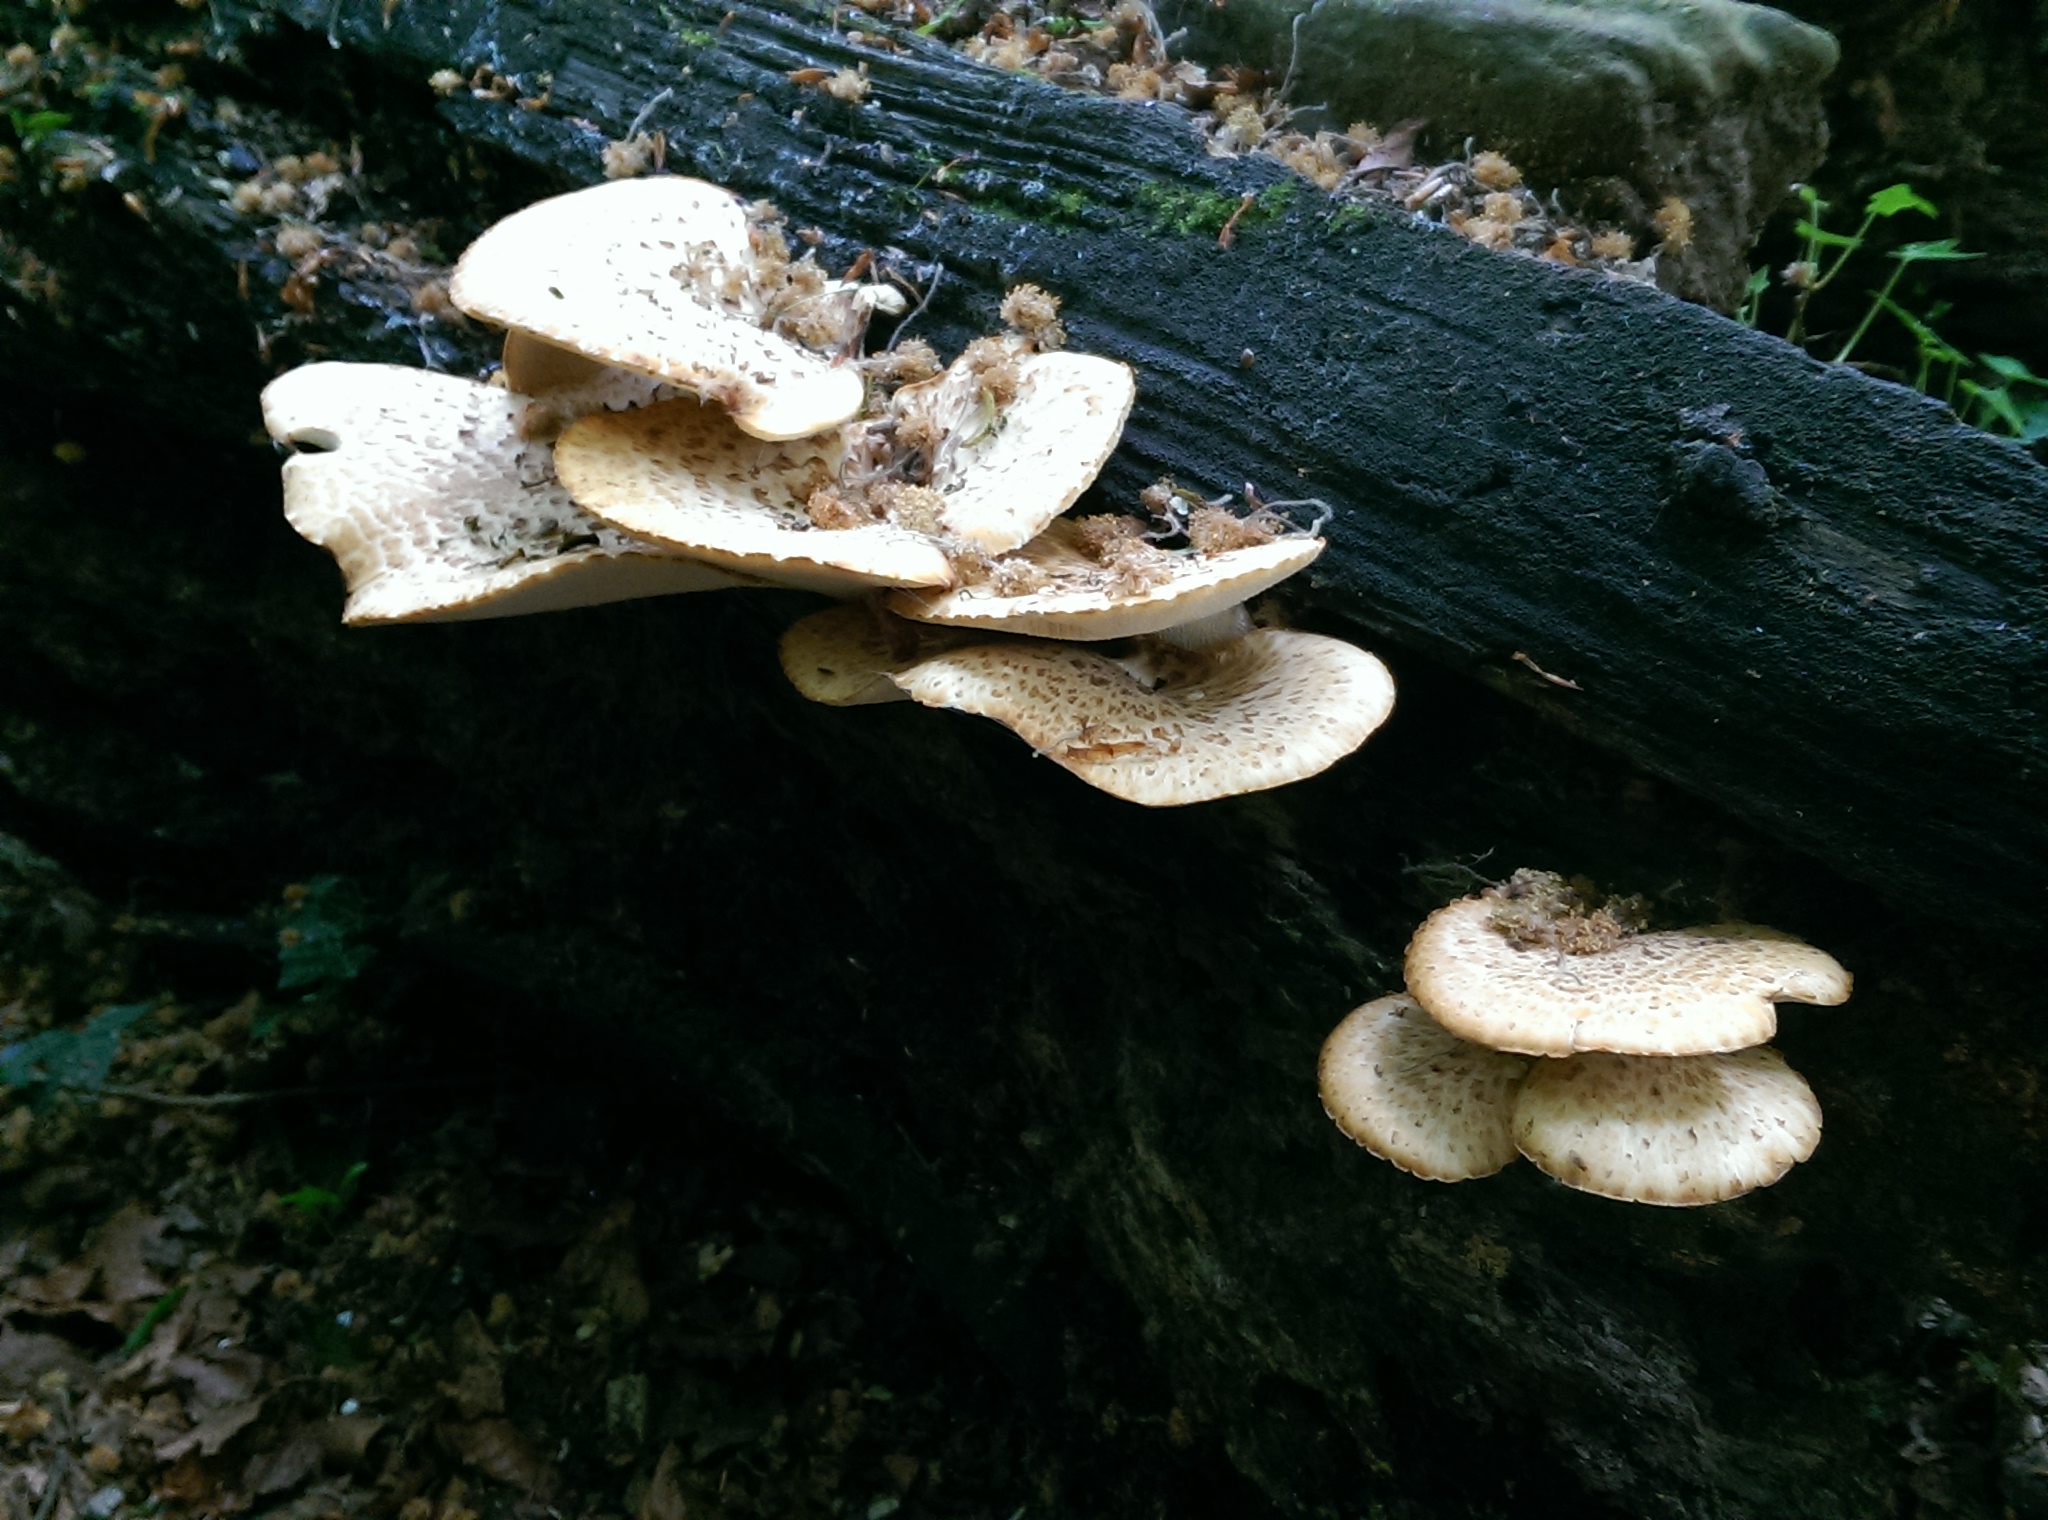 Fungi on a tree trunk